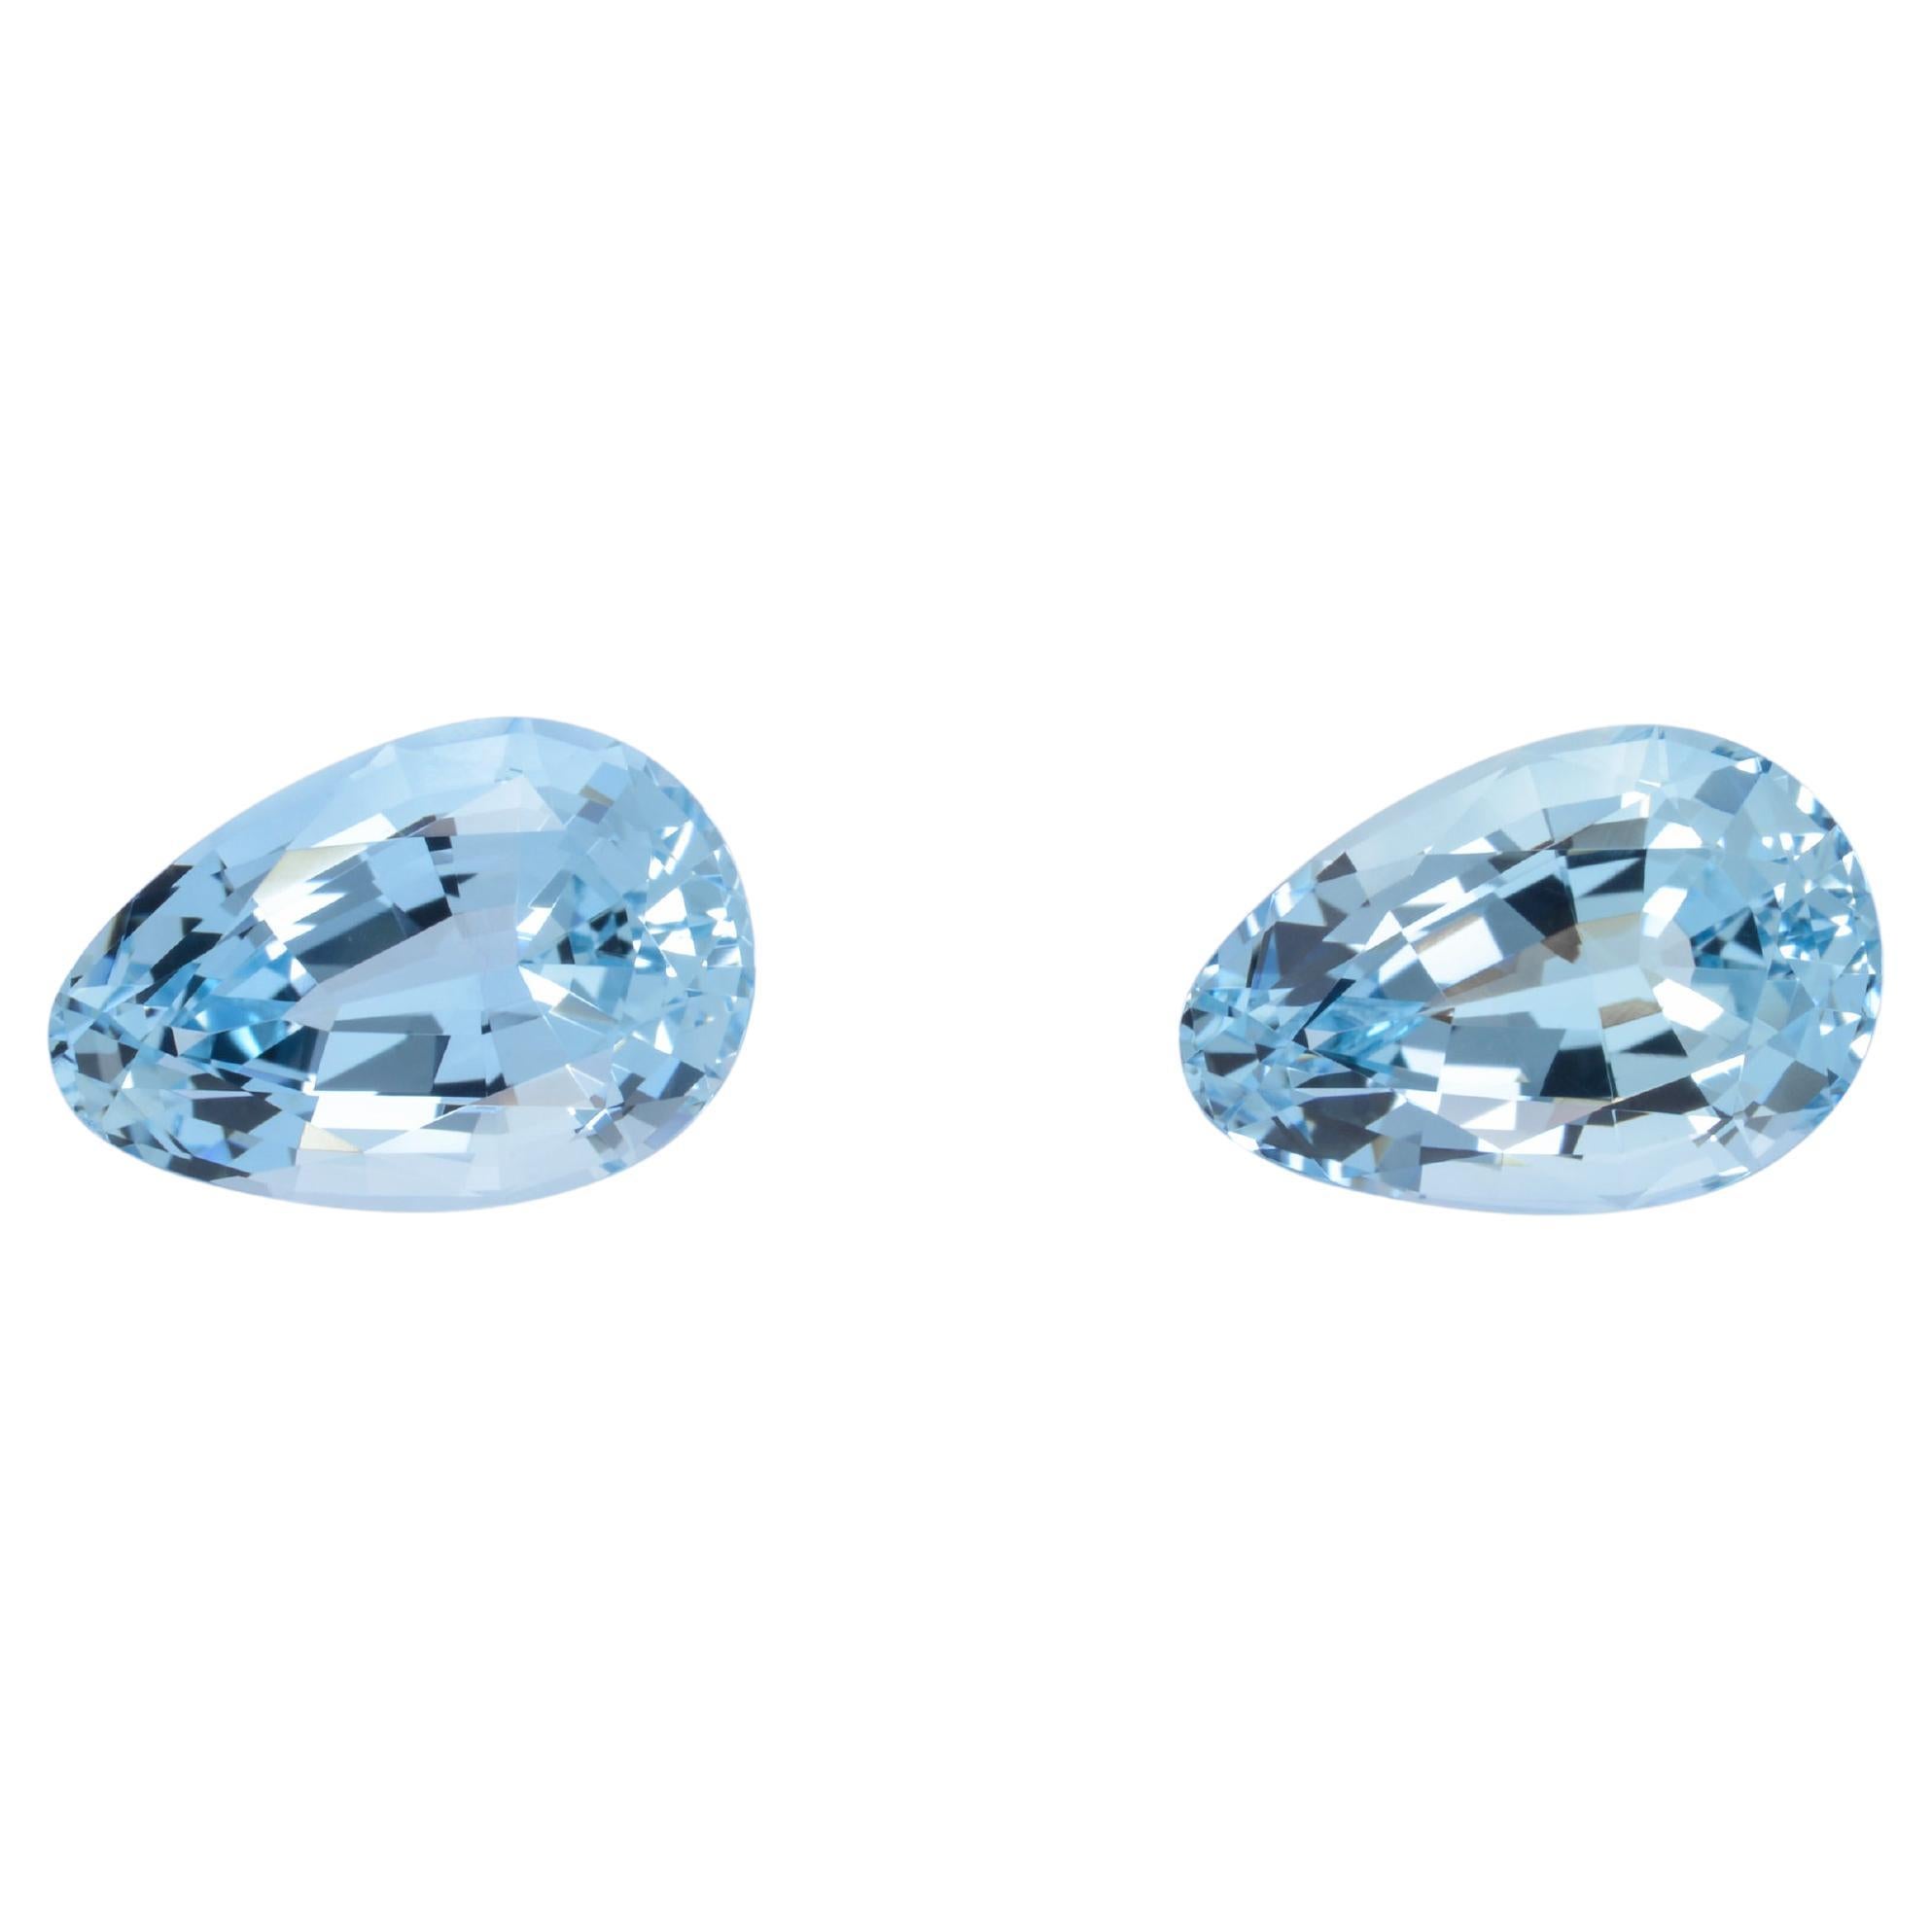 Aquamarine Earrings Loose Gemstones 10.87 Carat Pear Shapes Loupe Clean